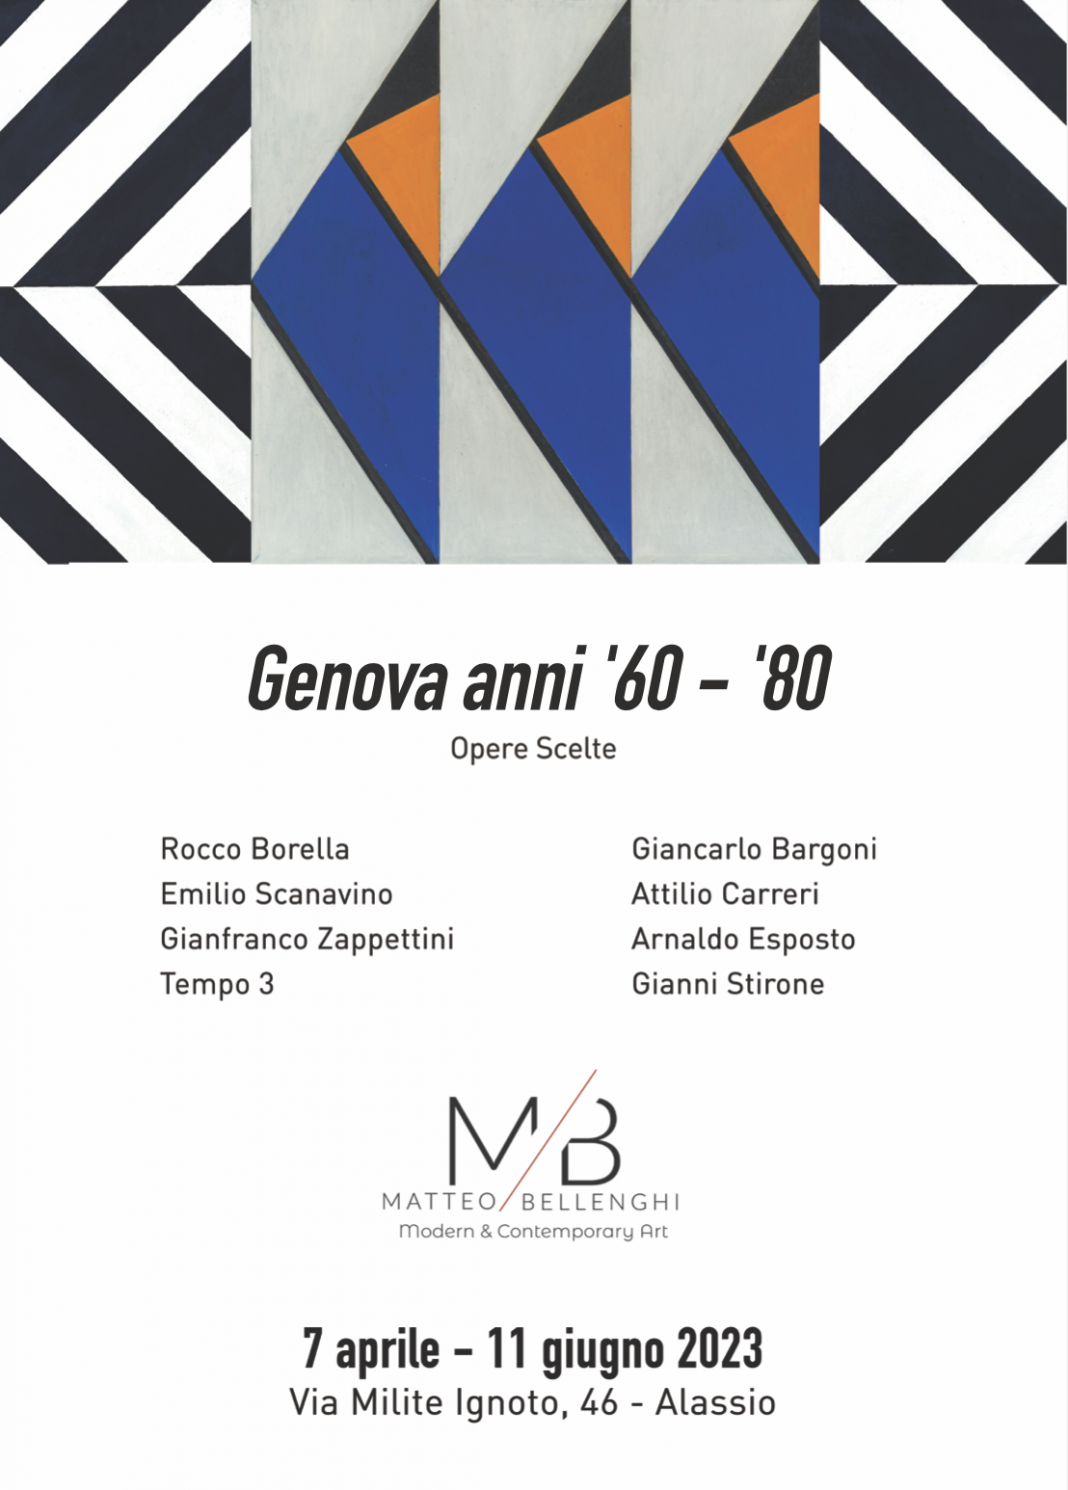 Genova anni ’60 – ’80https://www.exibart.com/repository/media/formidable/11/img/c93/Invito-mostra-1068x1490.png